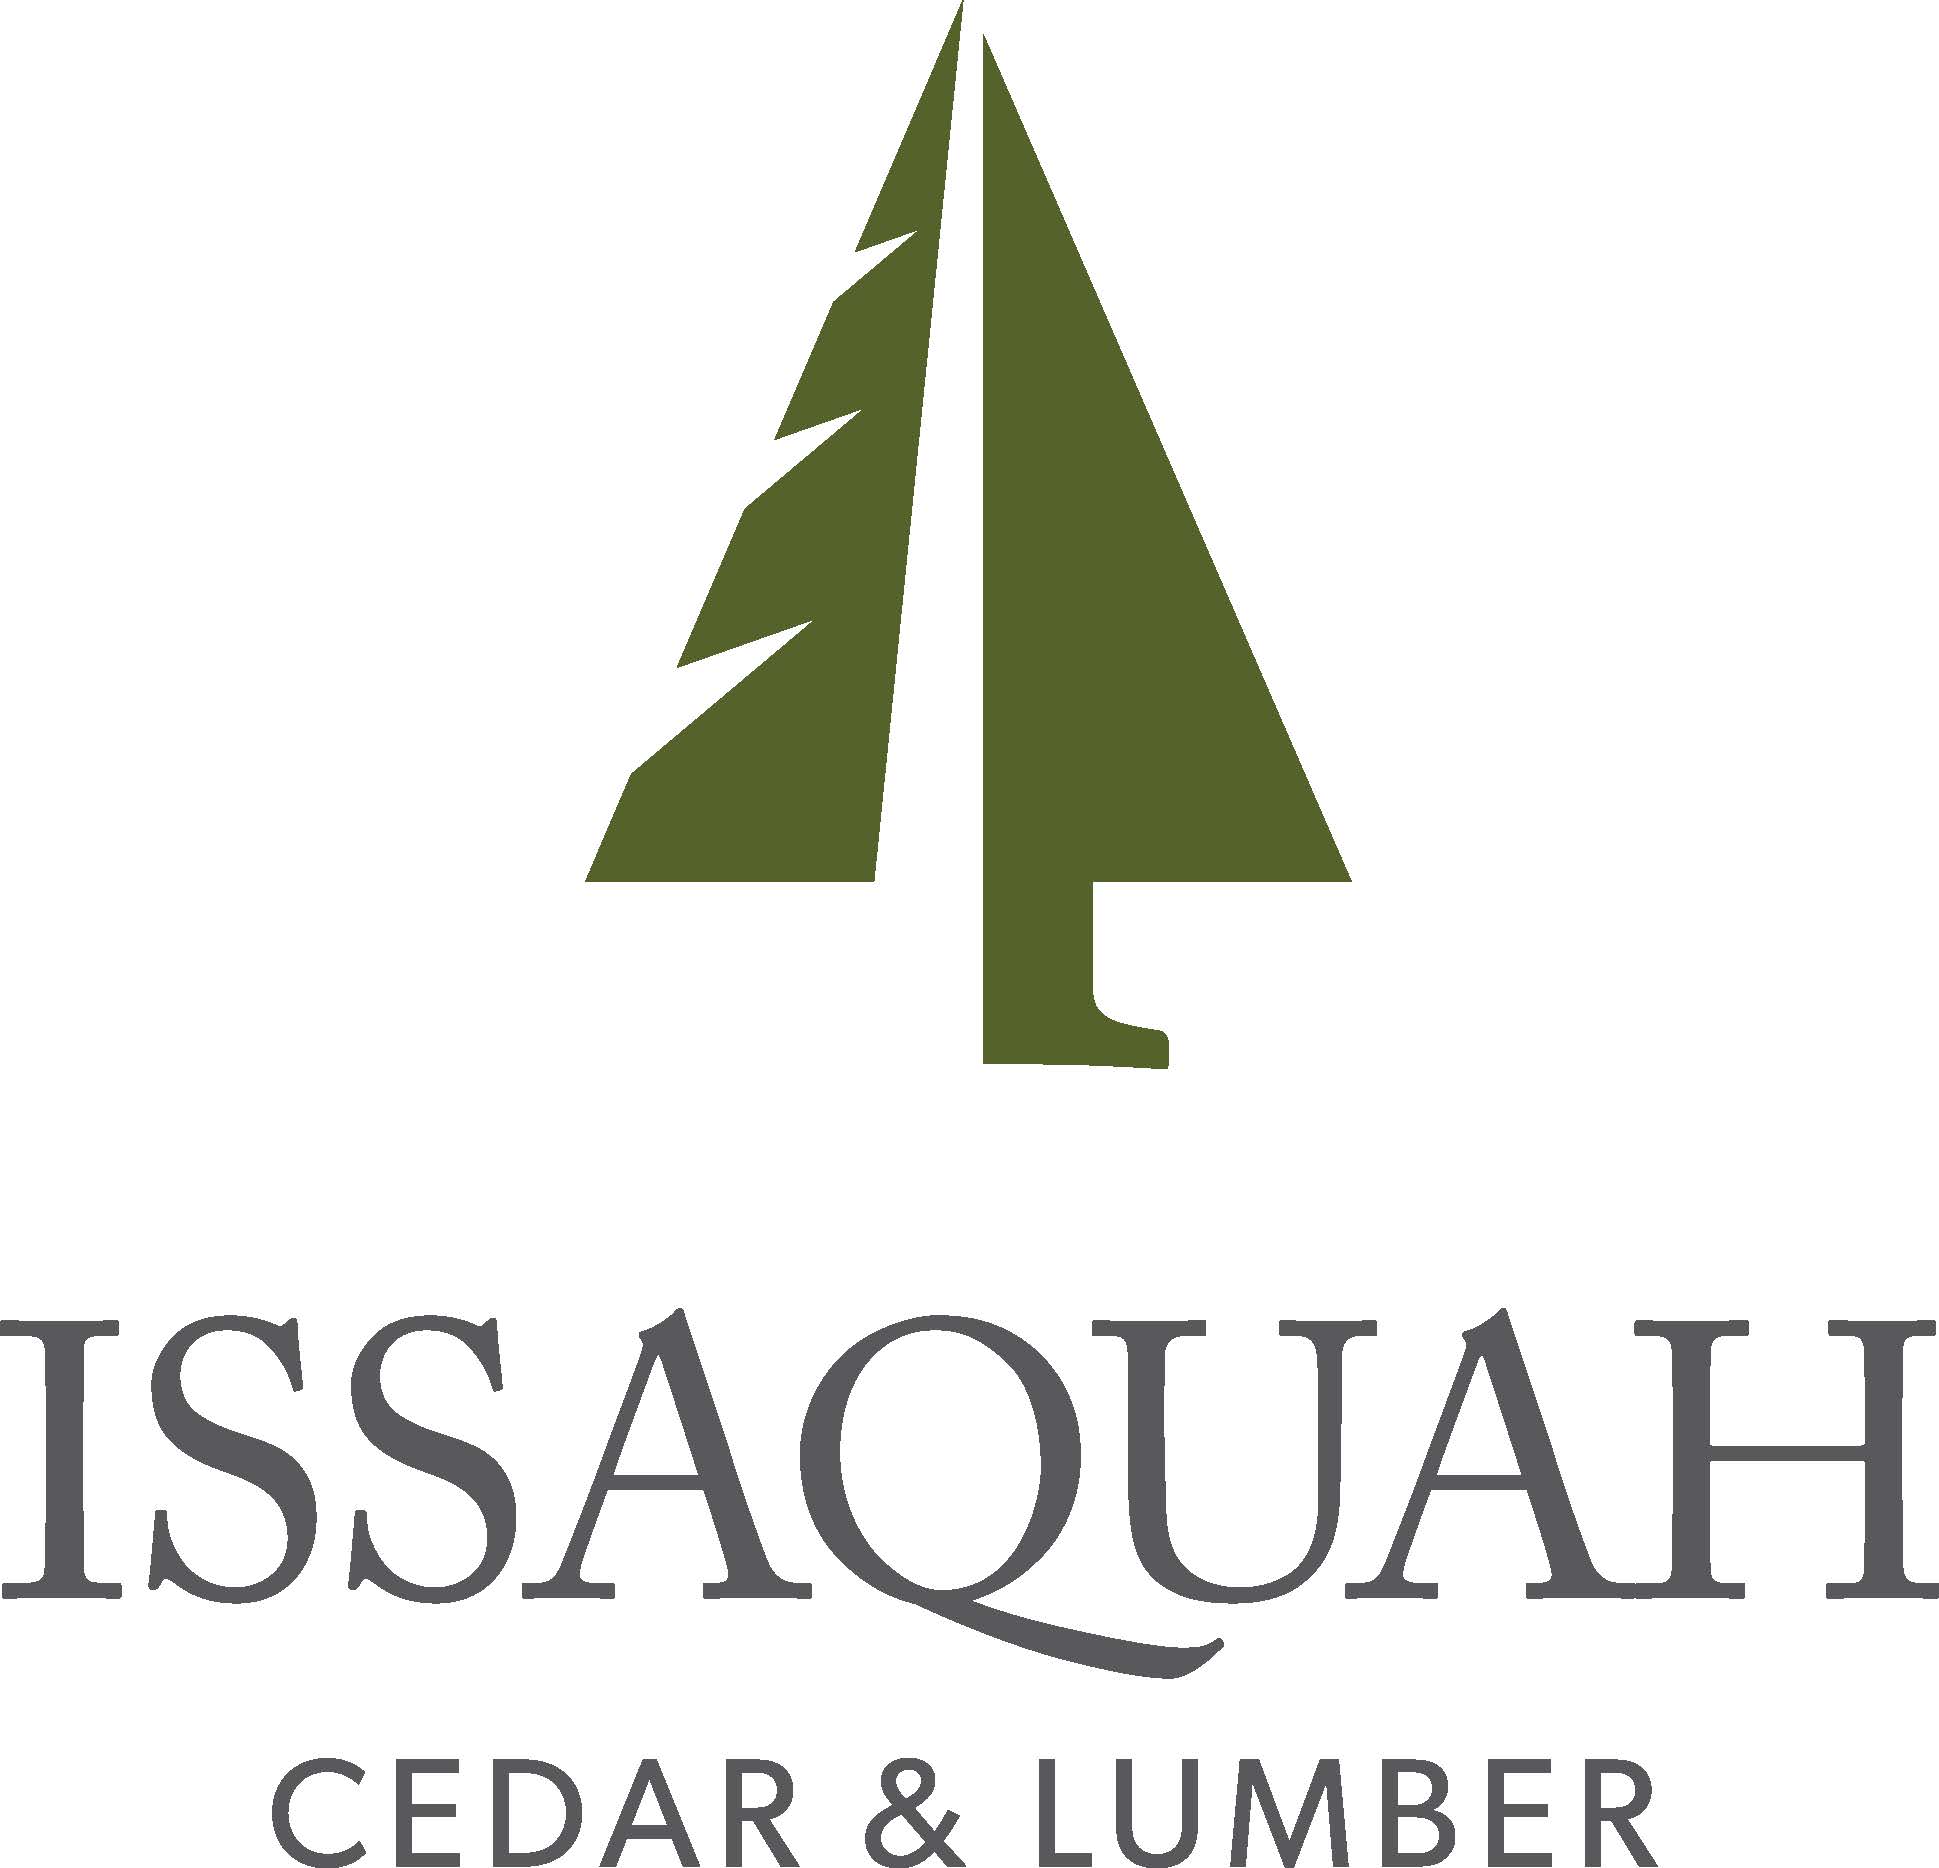 Issaquah Cedar & Lumber logo